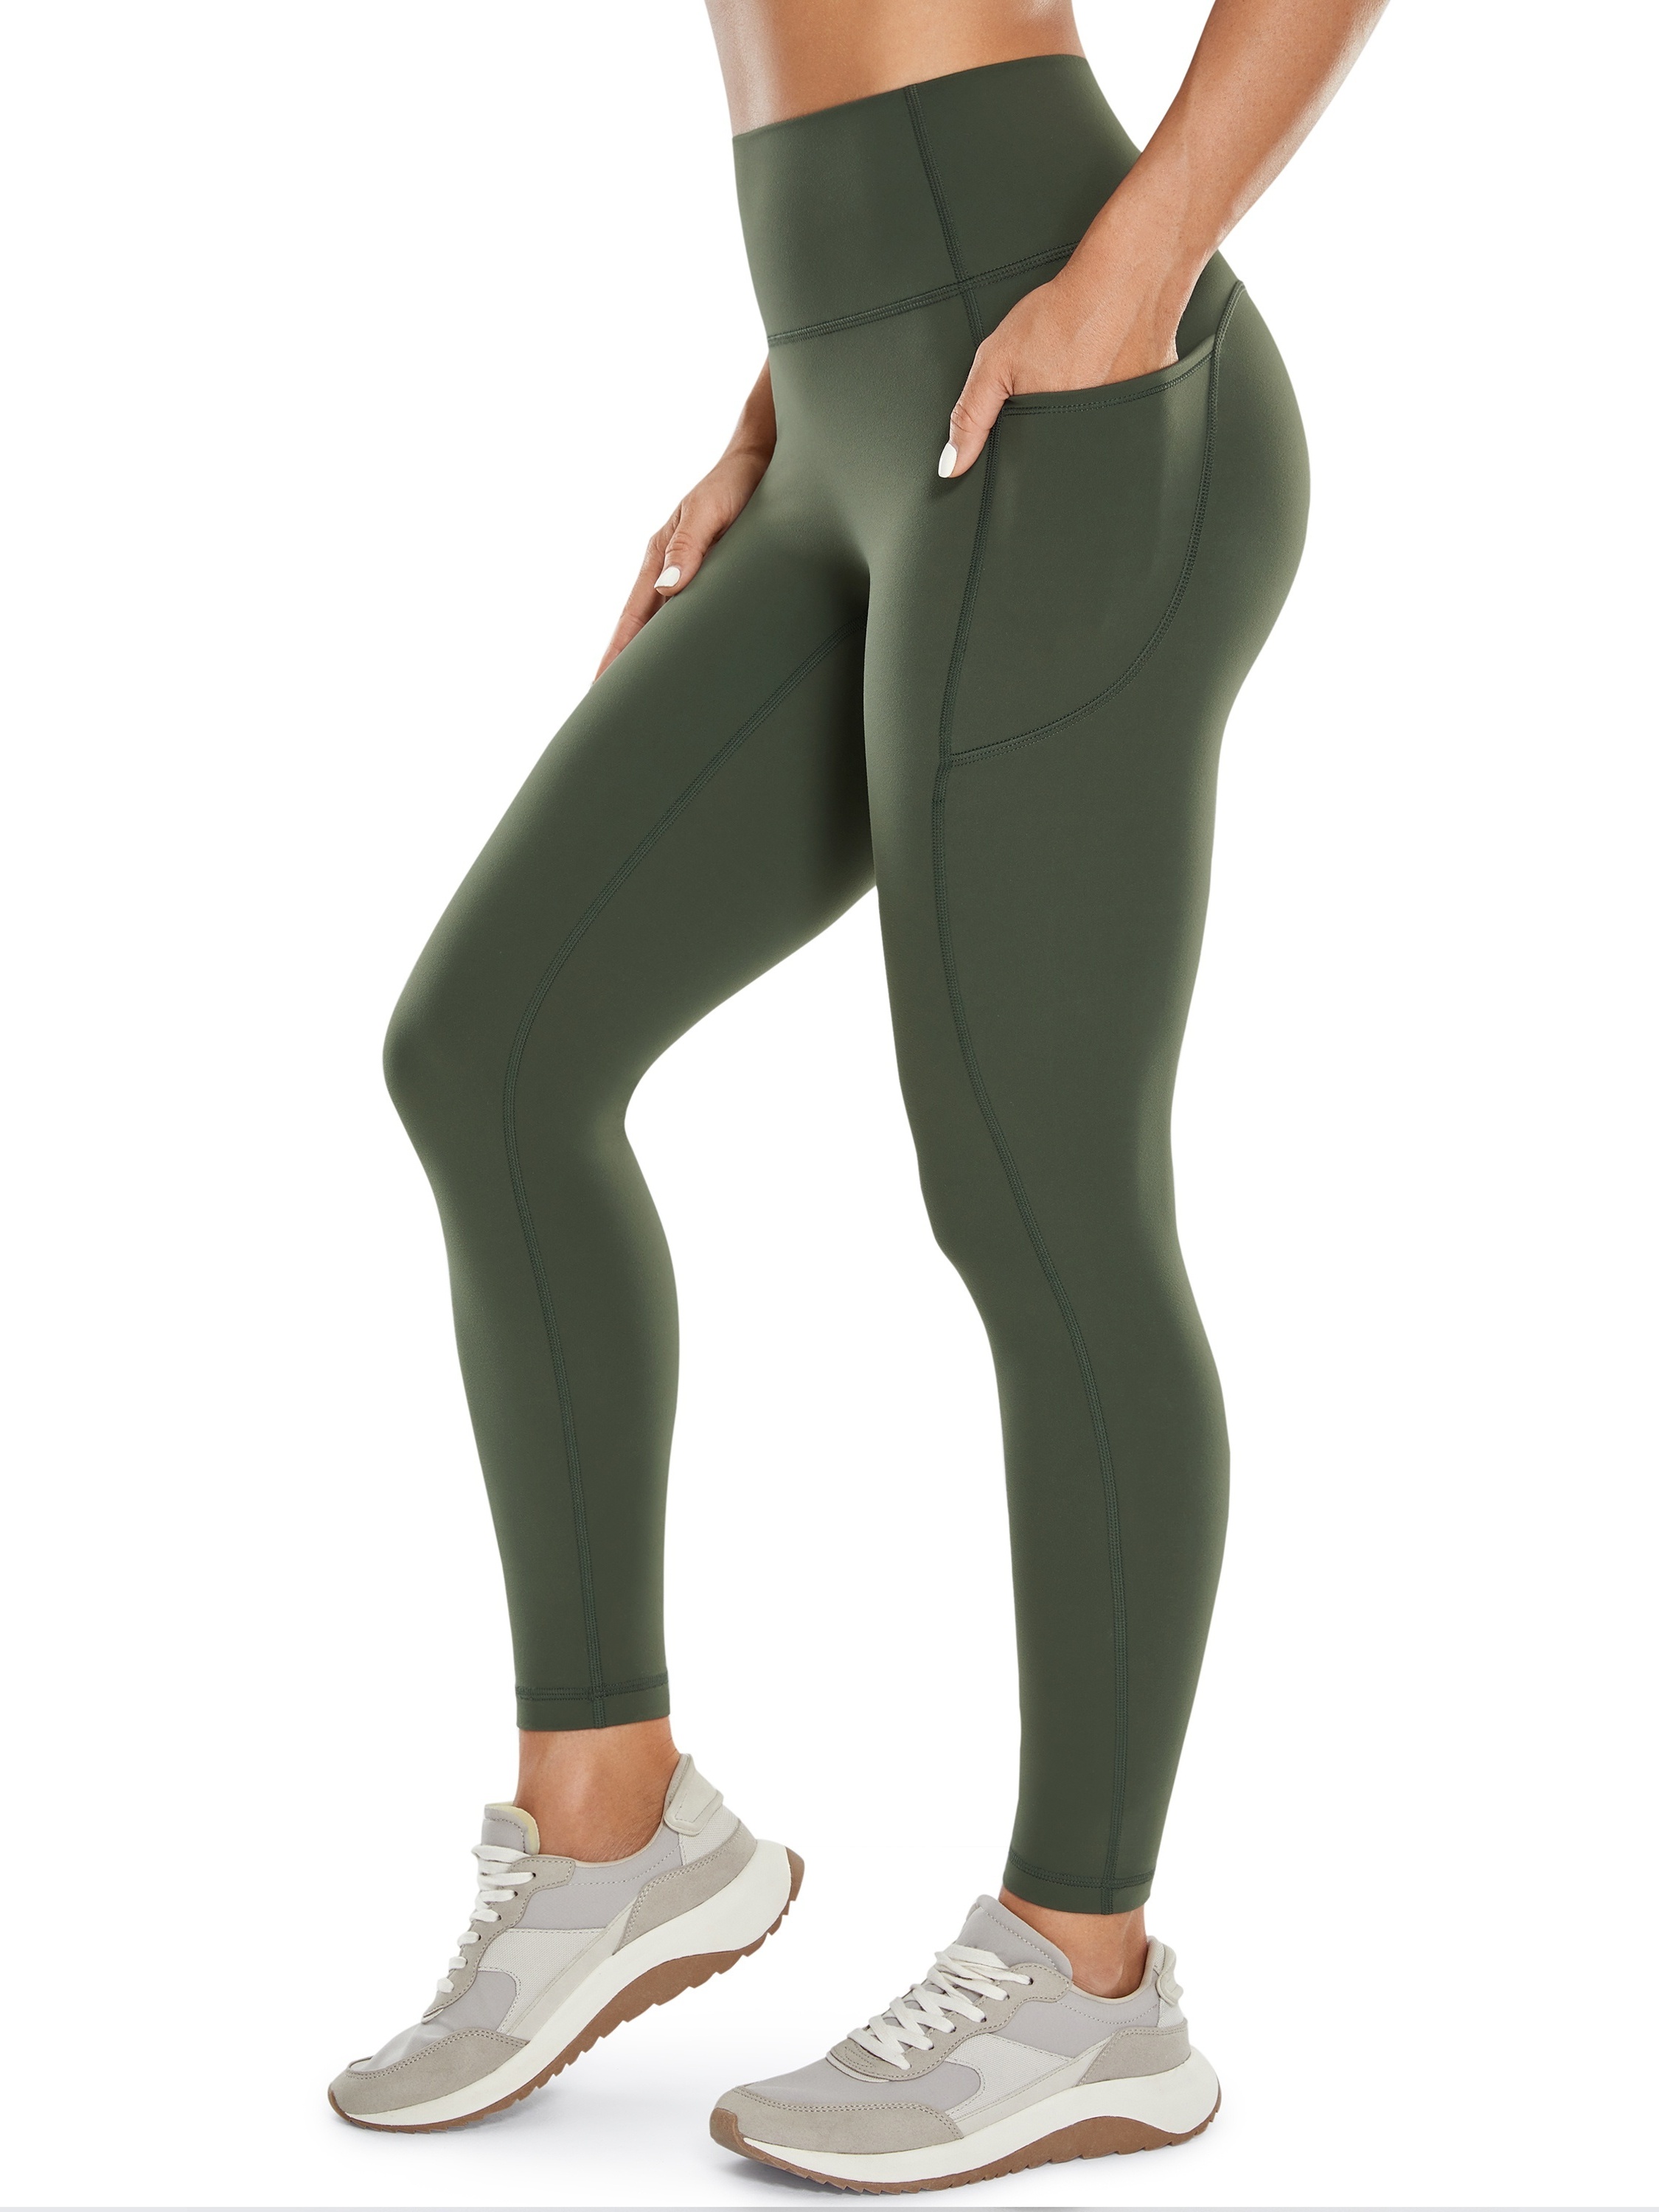 Pocket Sports Leggings Women Solid High Waist Fitness Yoga Pants